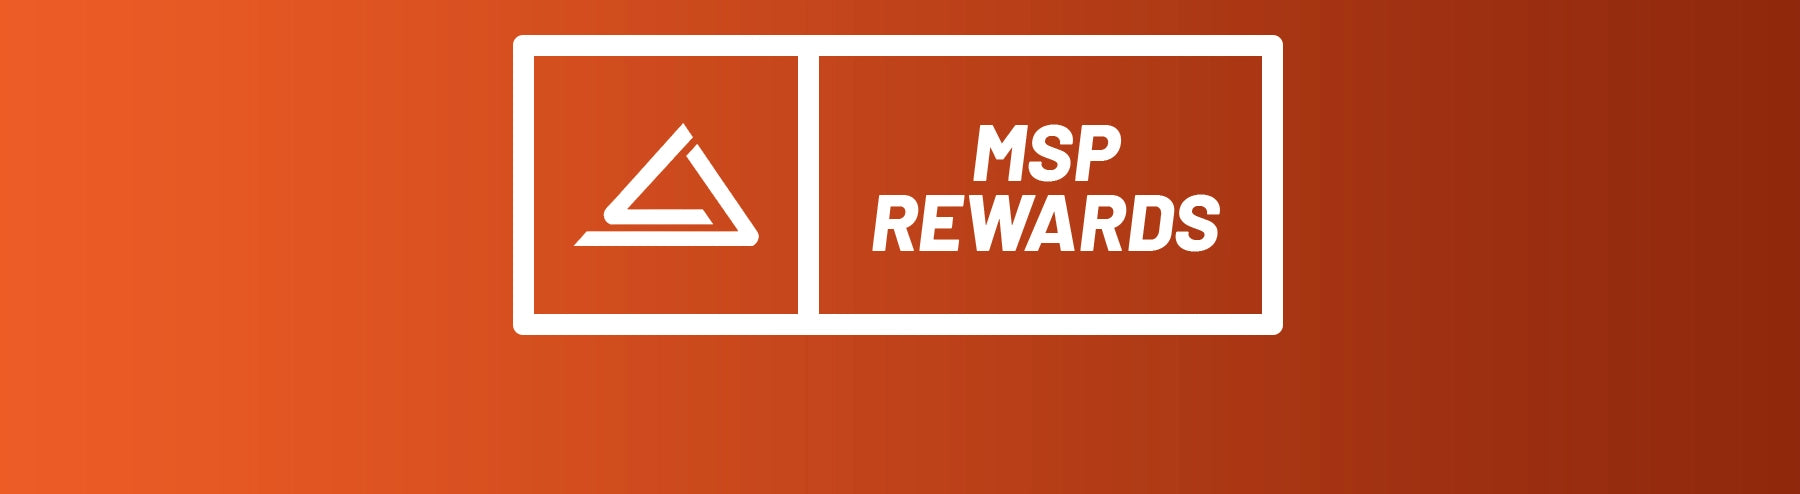 MSP Rewards